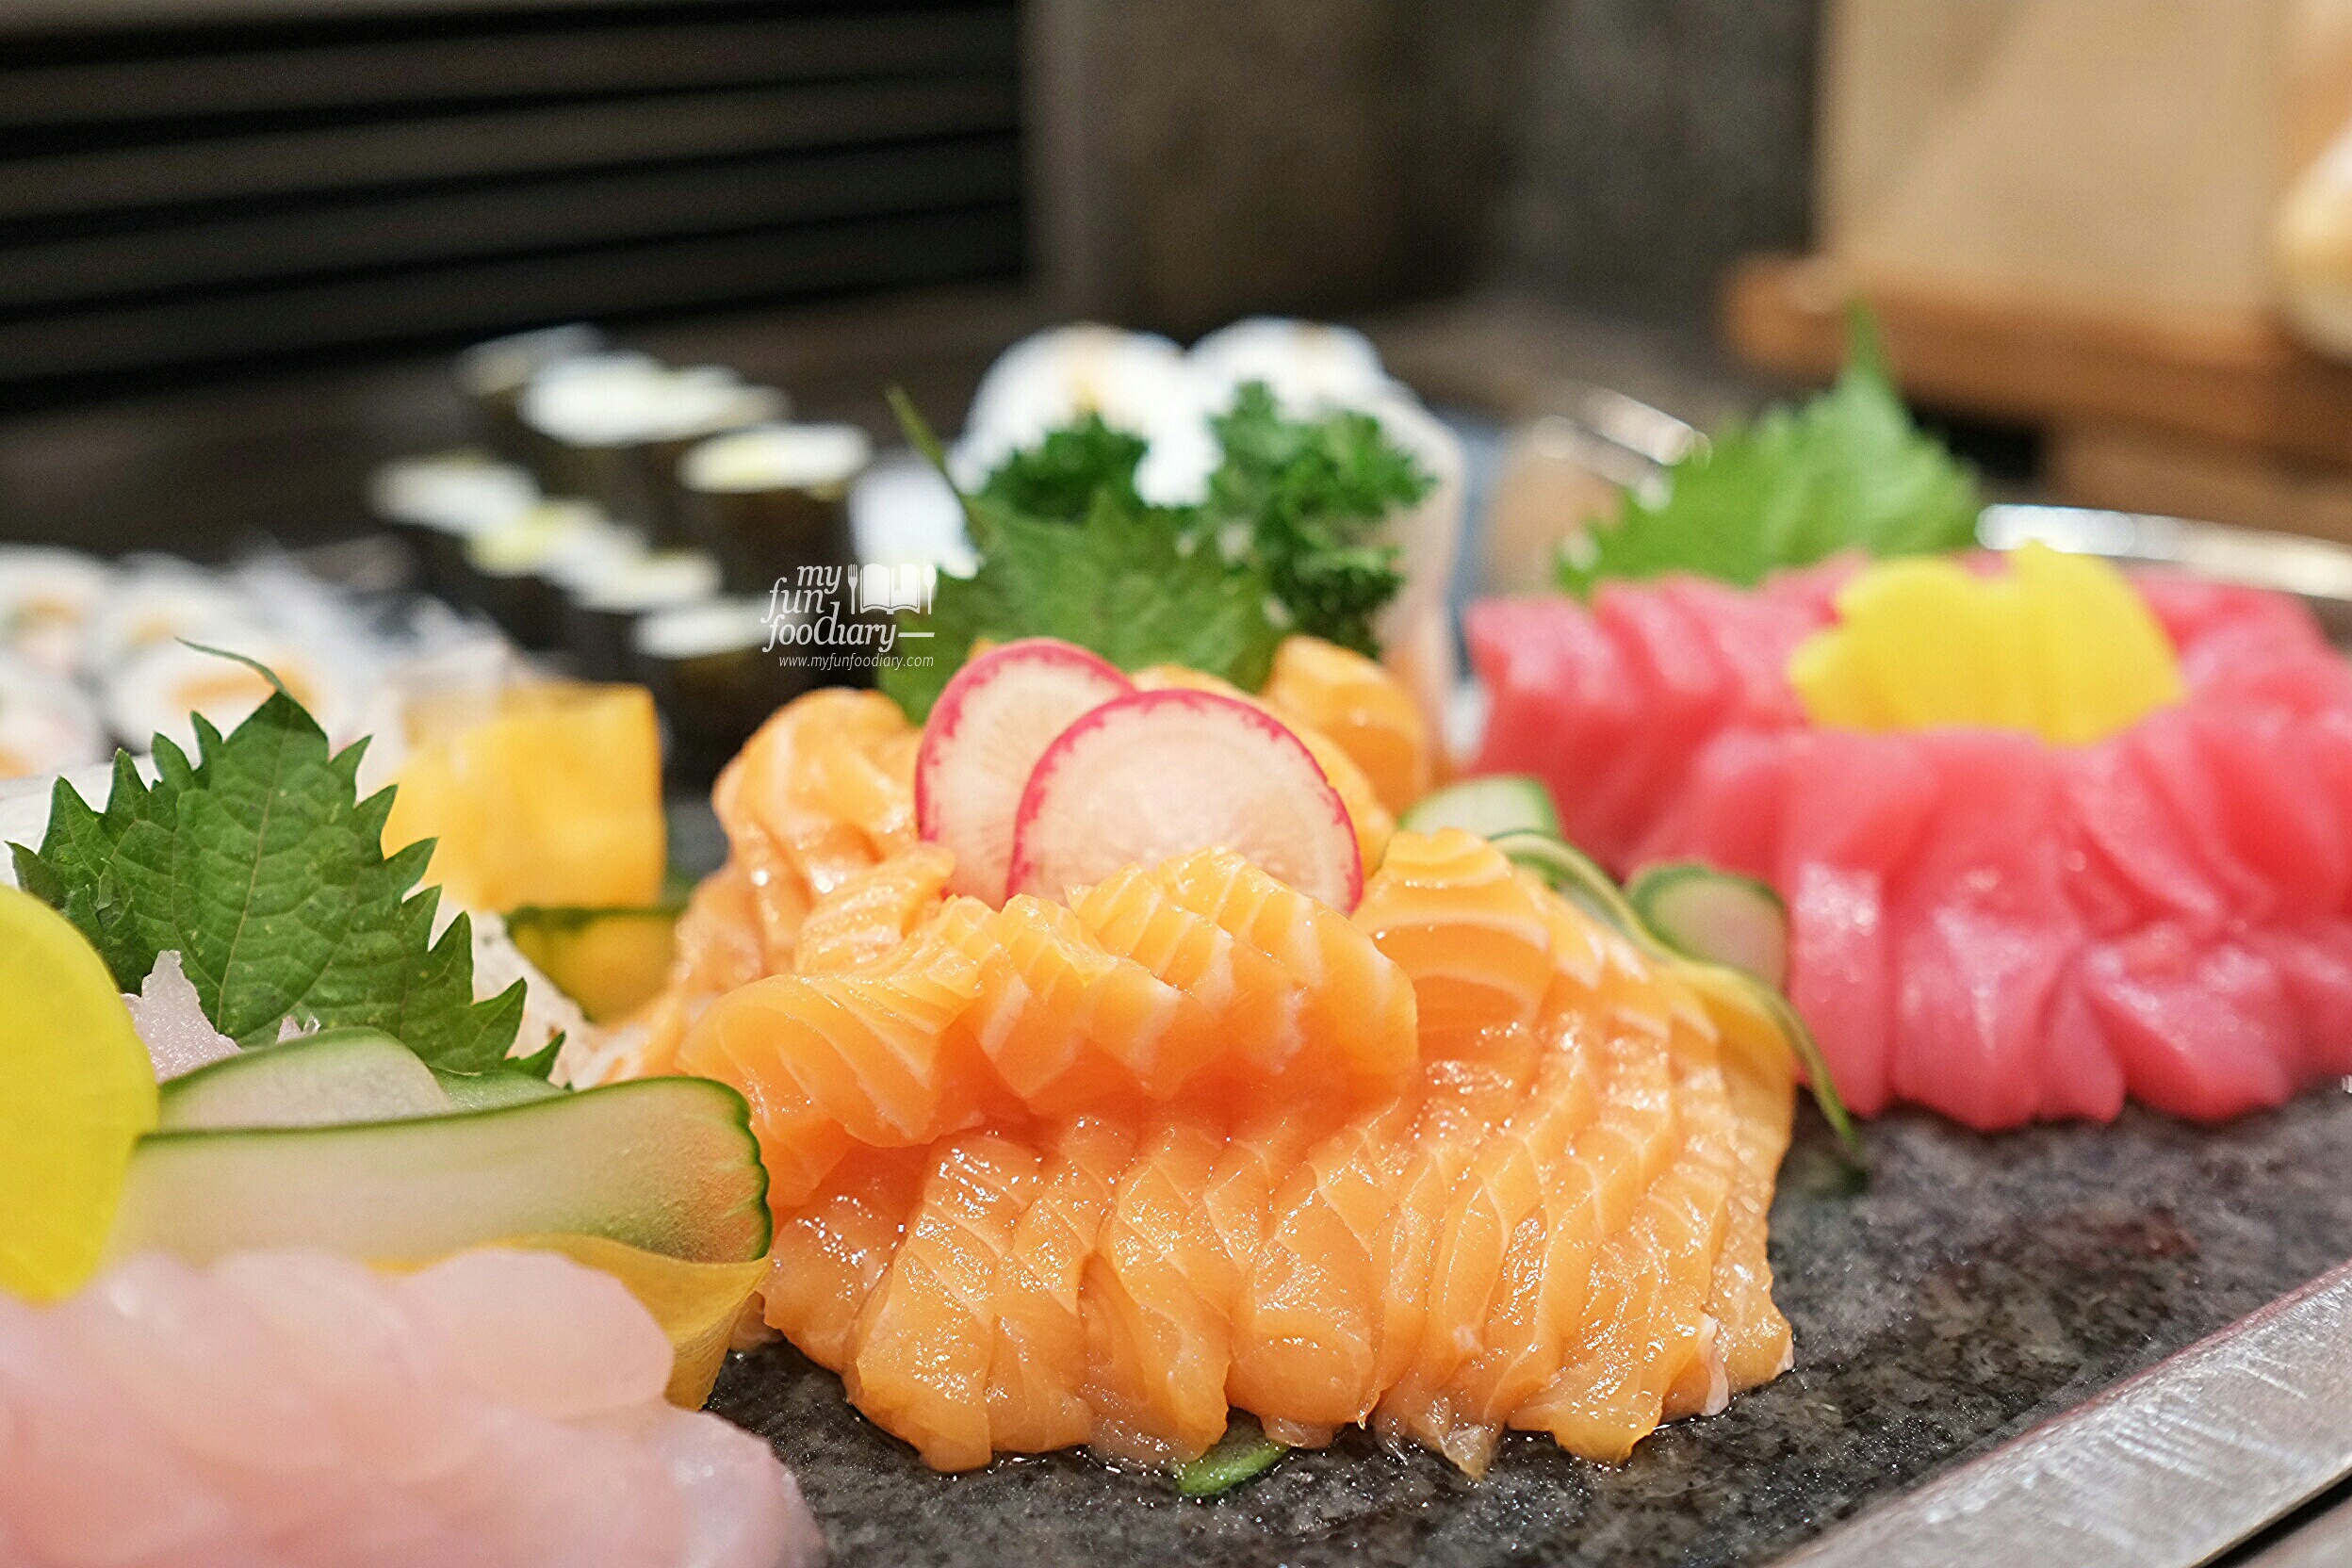 Sashimi and Salmon at Seasons Cafe by Myfunfoodiary